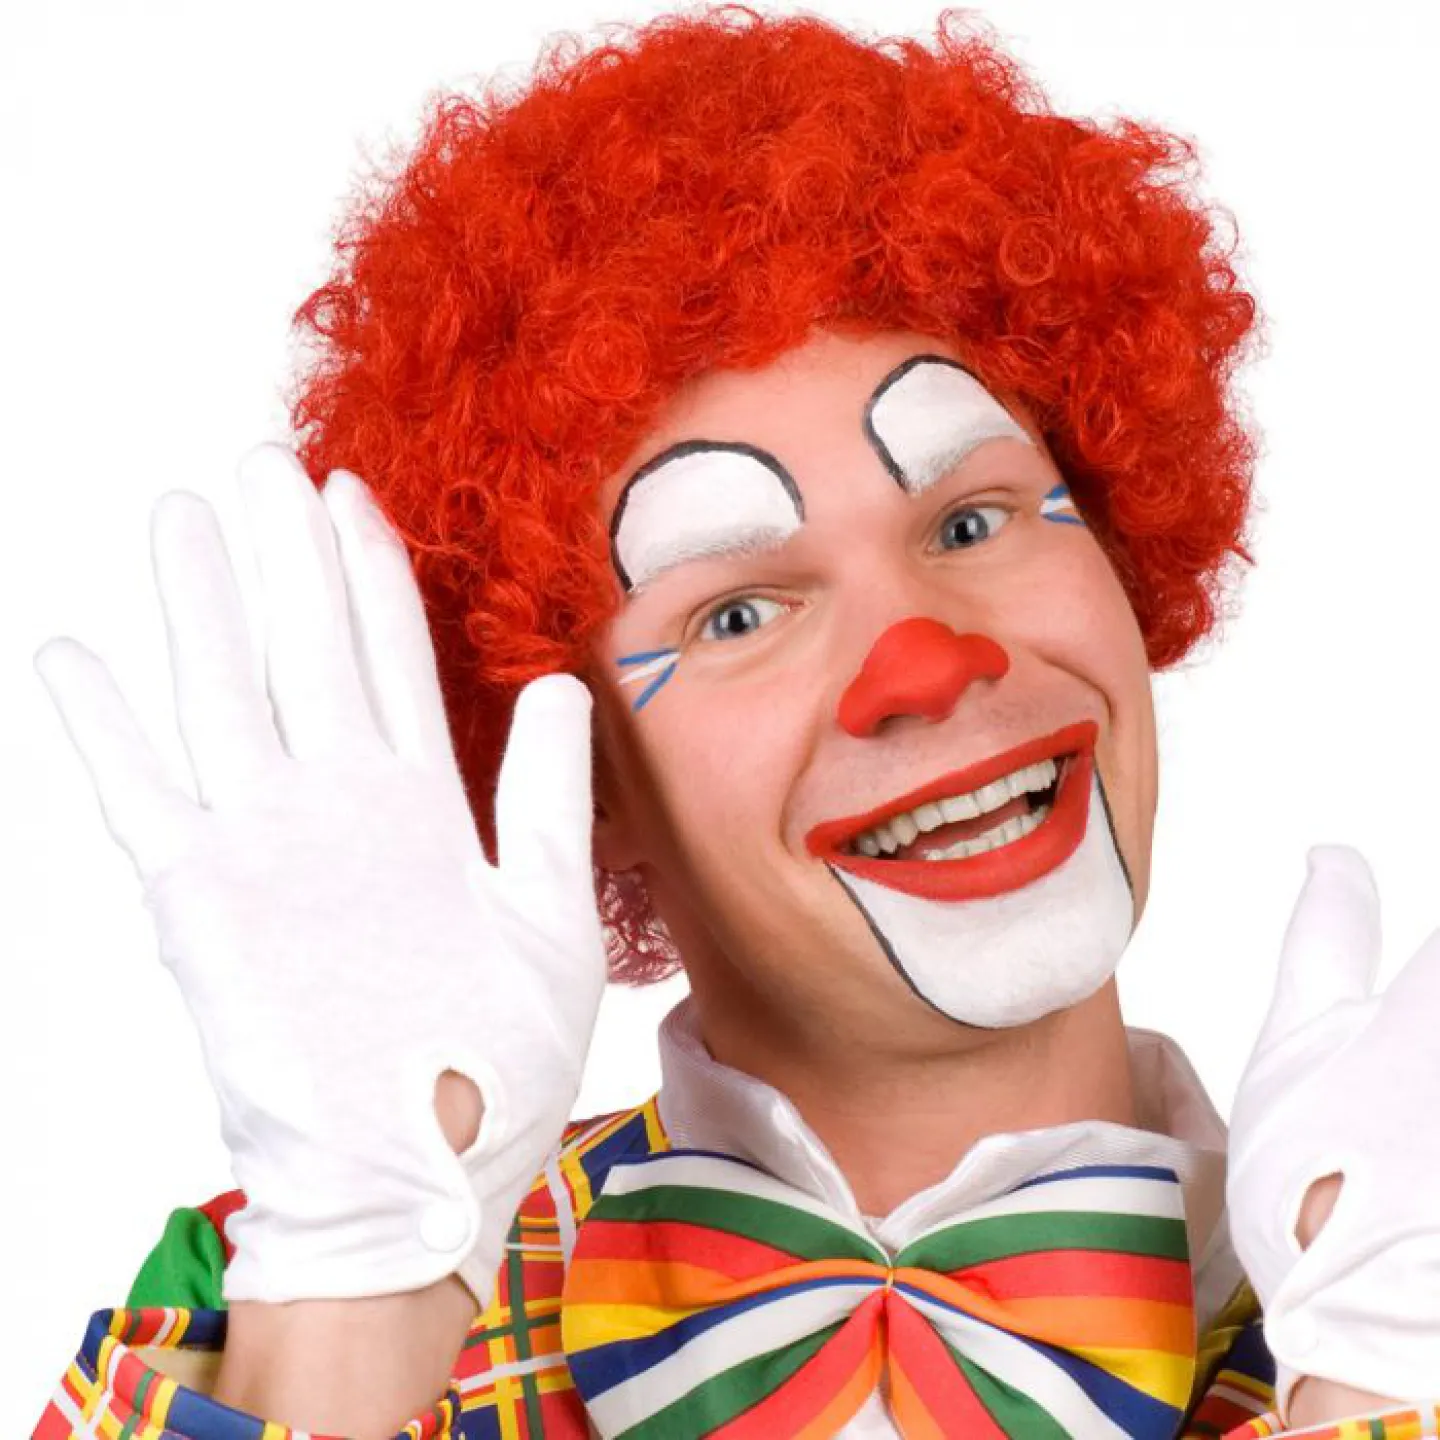 Pruik carnaval rood clown kopen.